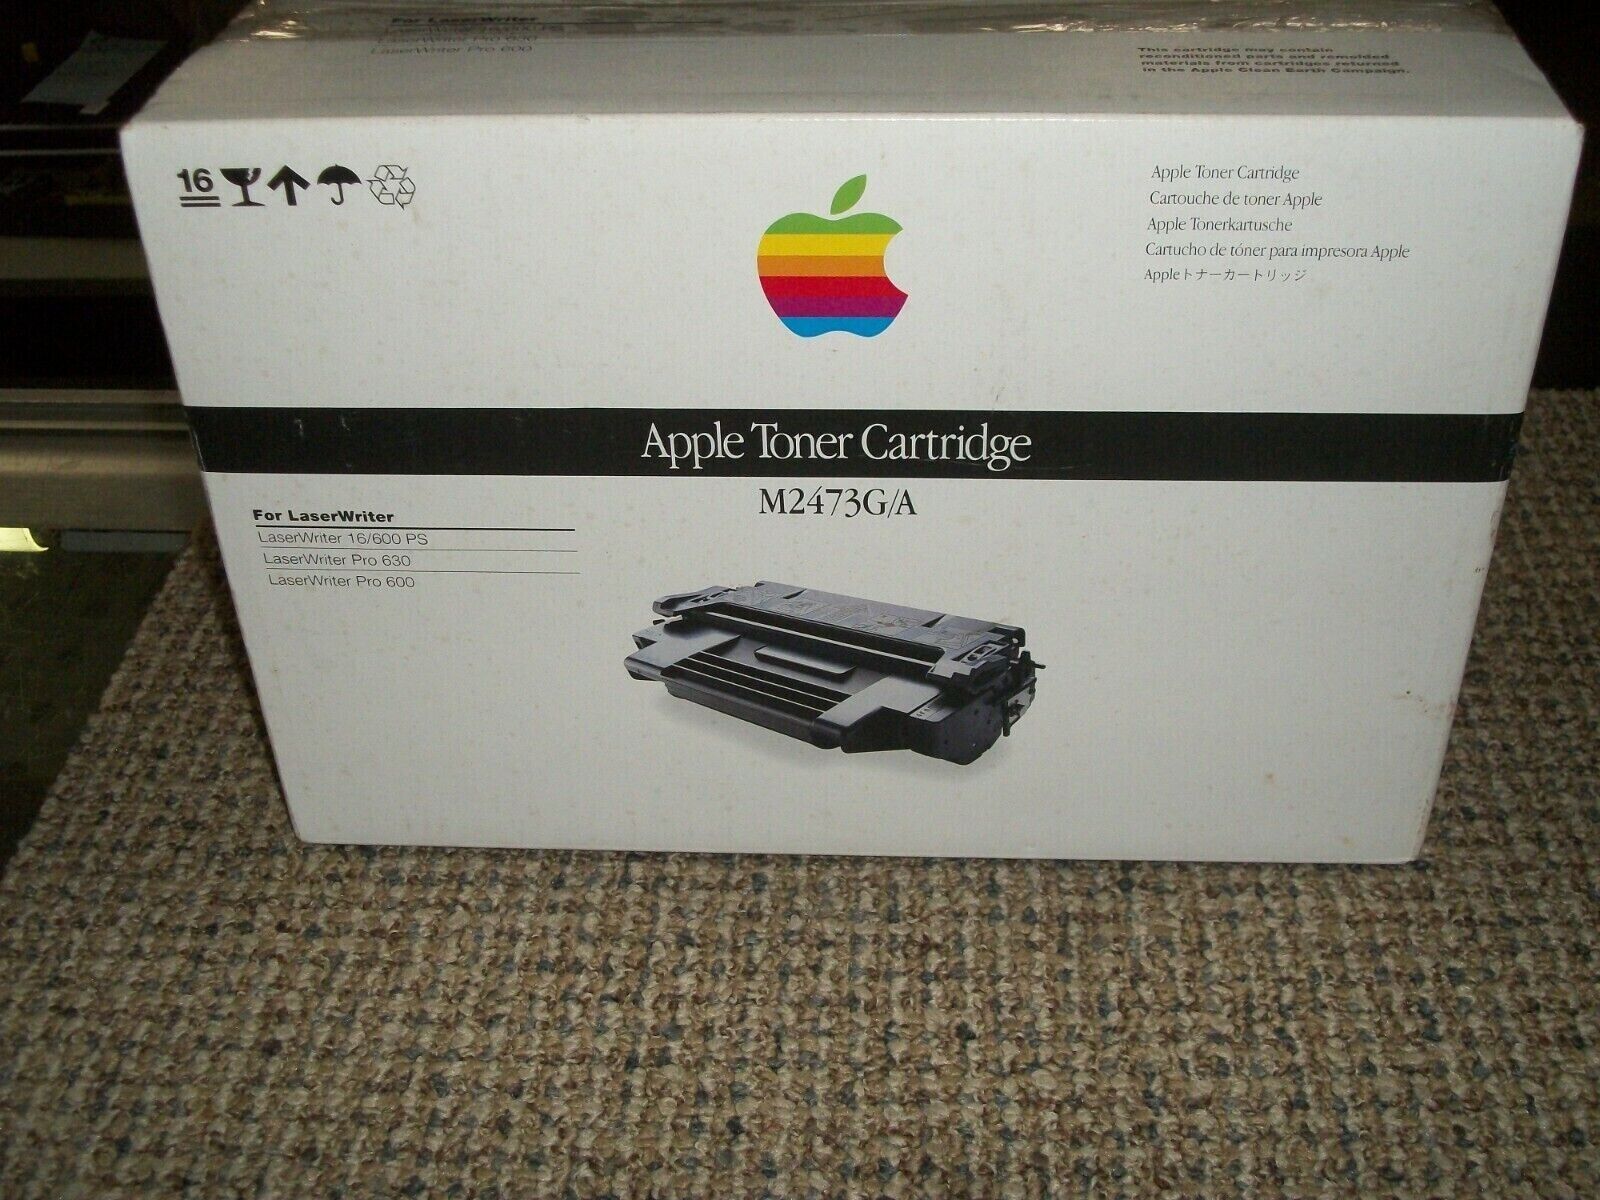 Apple LaserWriter 16/600 PS Toner Cartridge M2473G/A